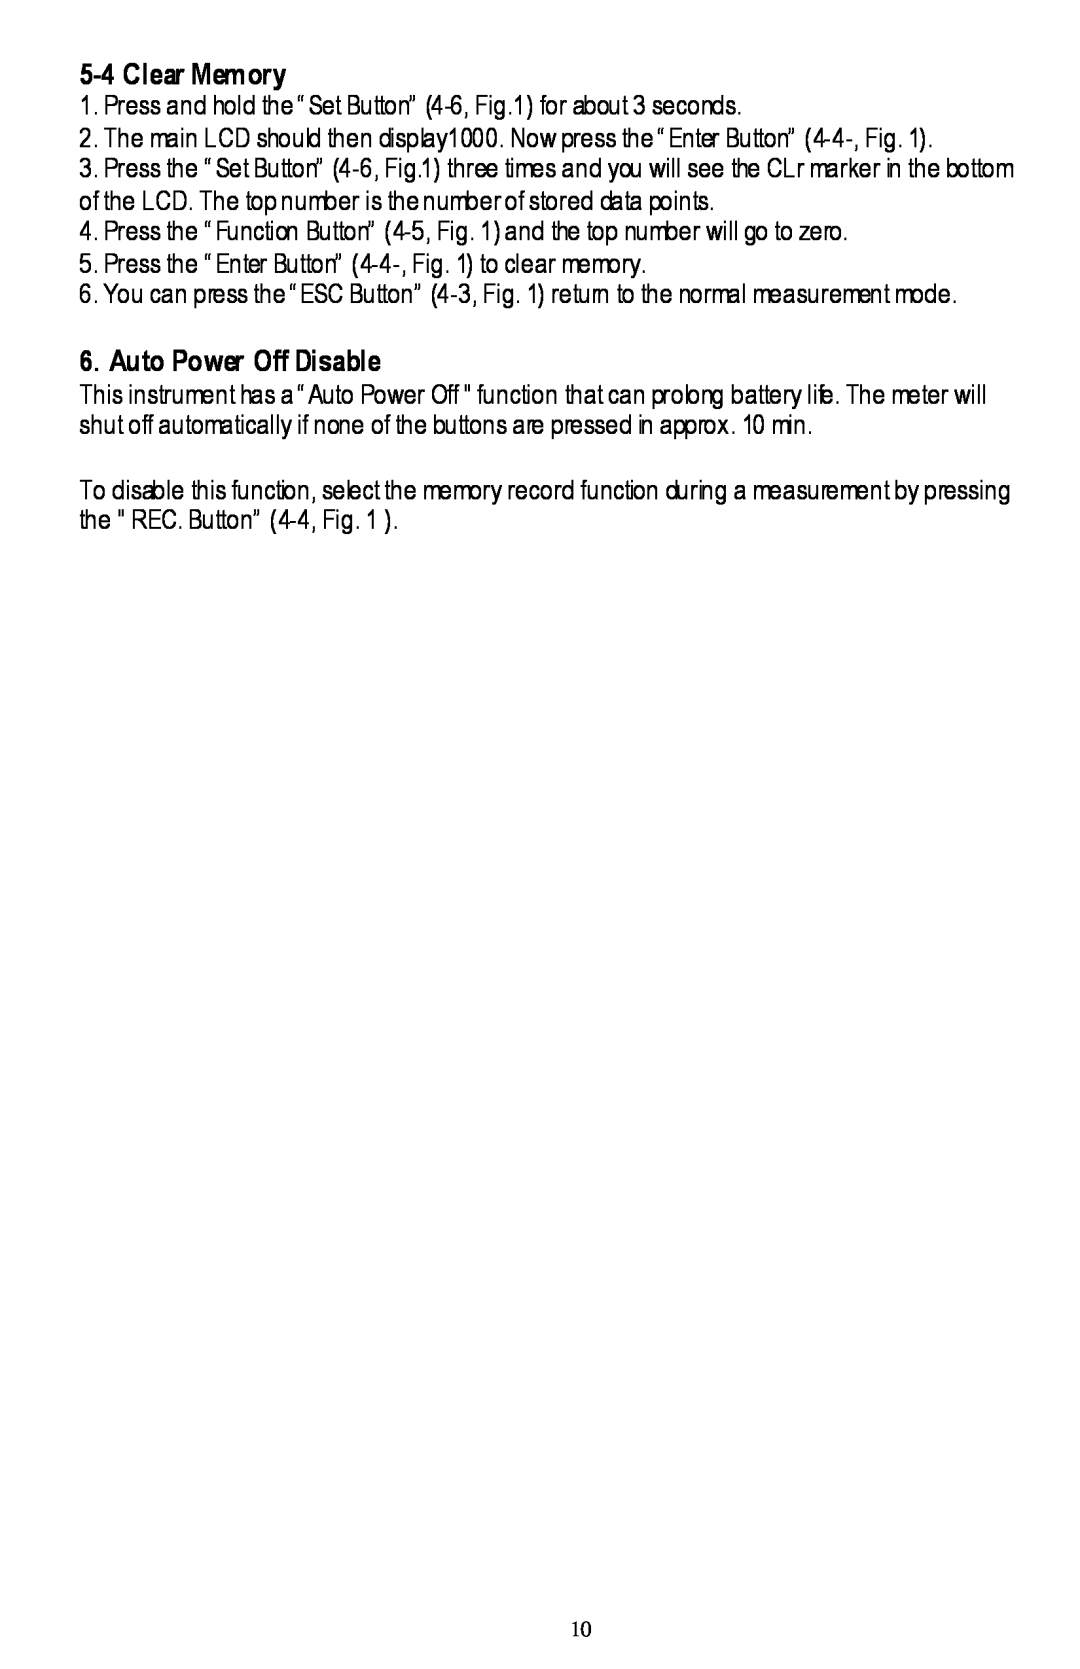 Anaheim H300 instruction manual 5-4Clear Mem ory, Auto Power Off Disable 